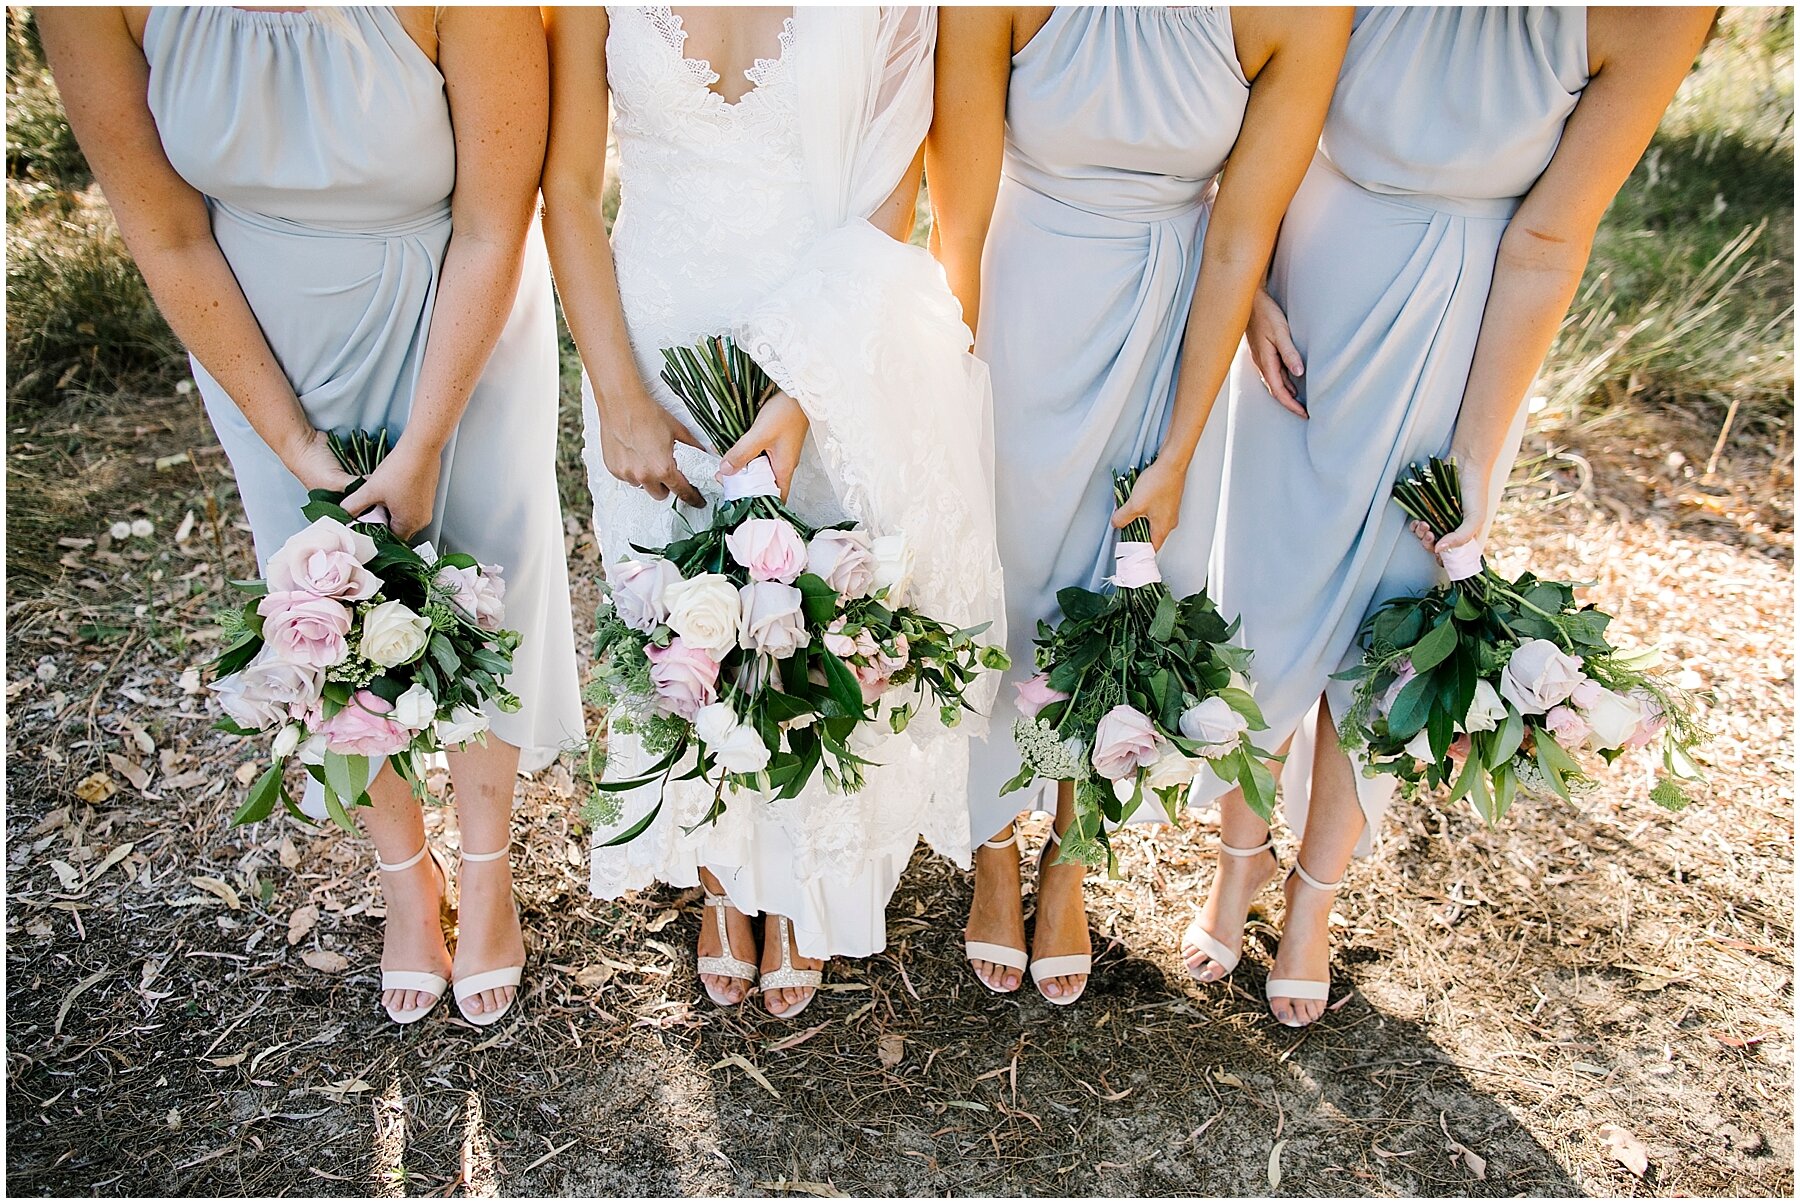 Kiss Chasey Wedding Flowers | Perth Wedding